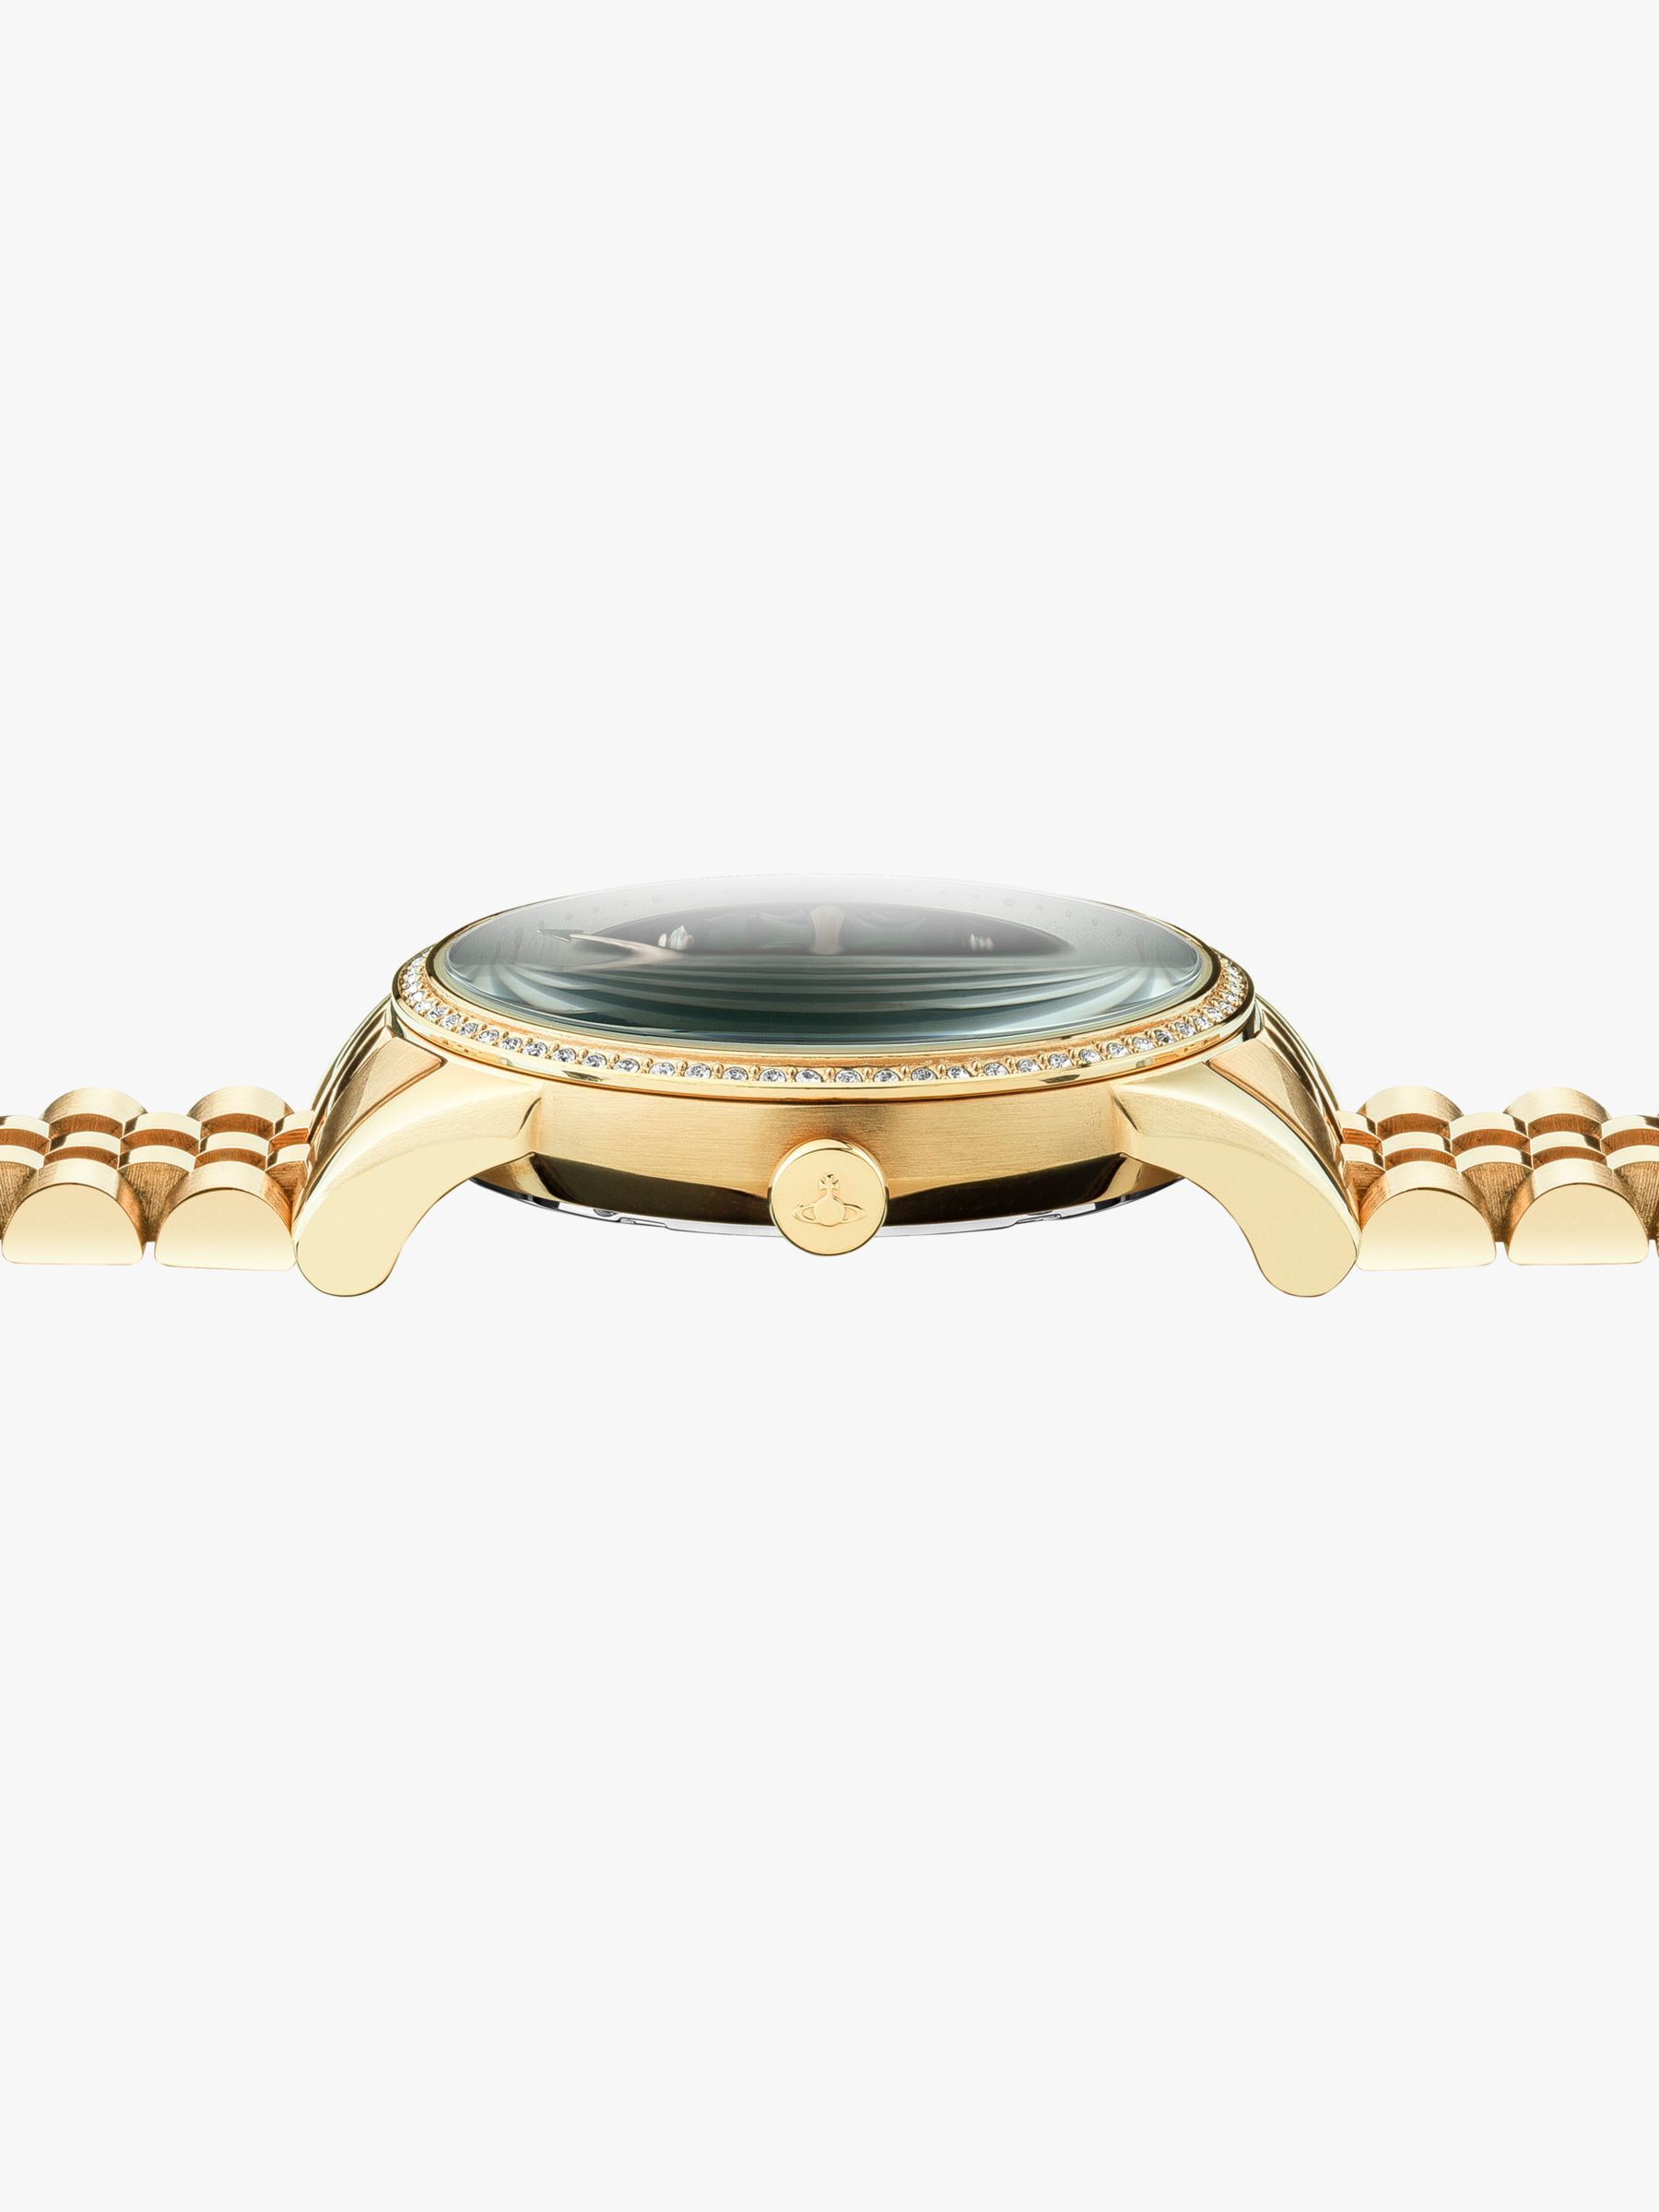 Buy Vivienne Westwood Women's The Wallace Swarovski Crystal Bracelet Strap Watch, Gold/Green VV208GDGD Online at johnlewis.com